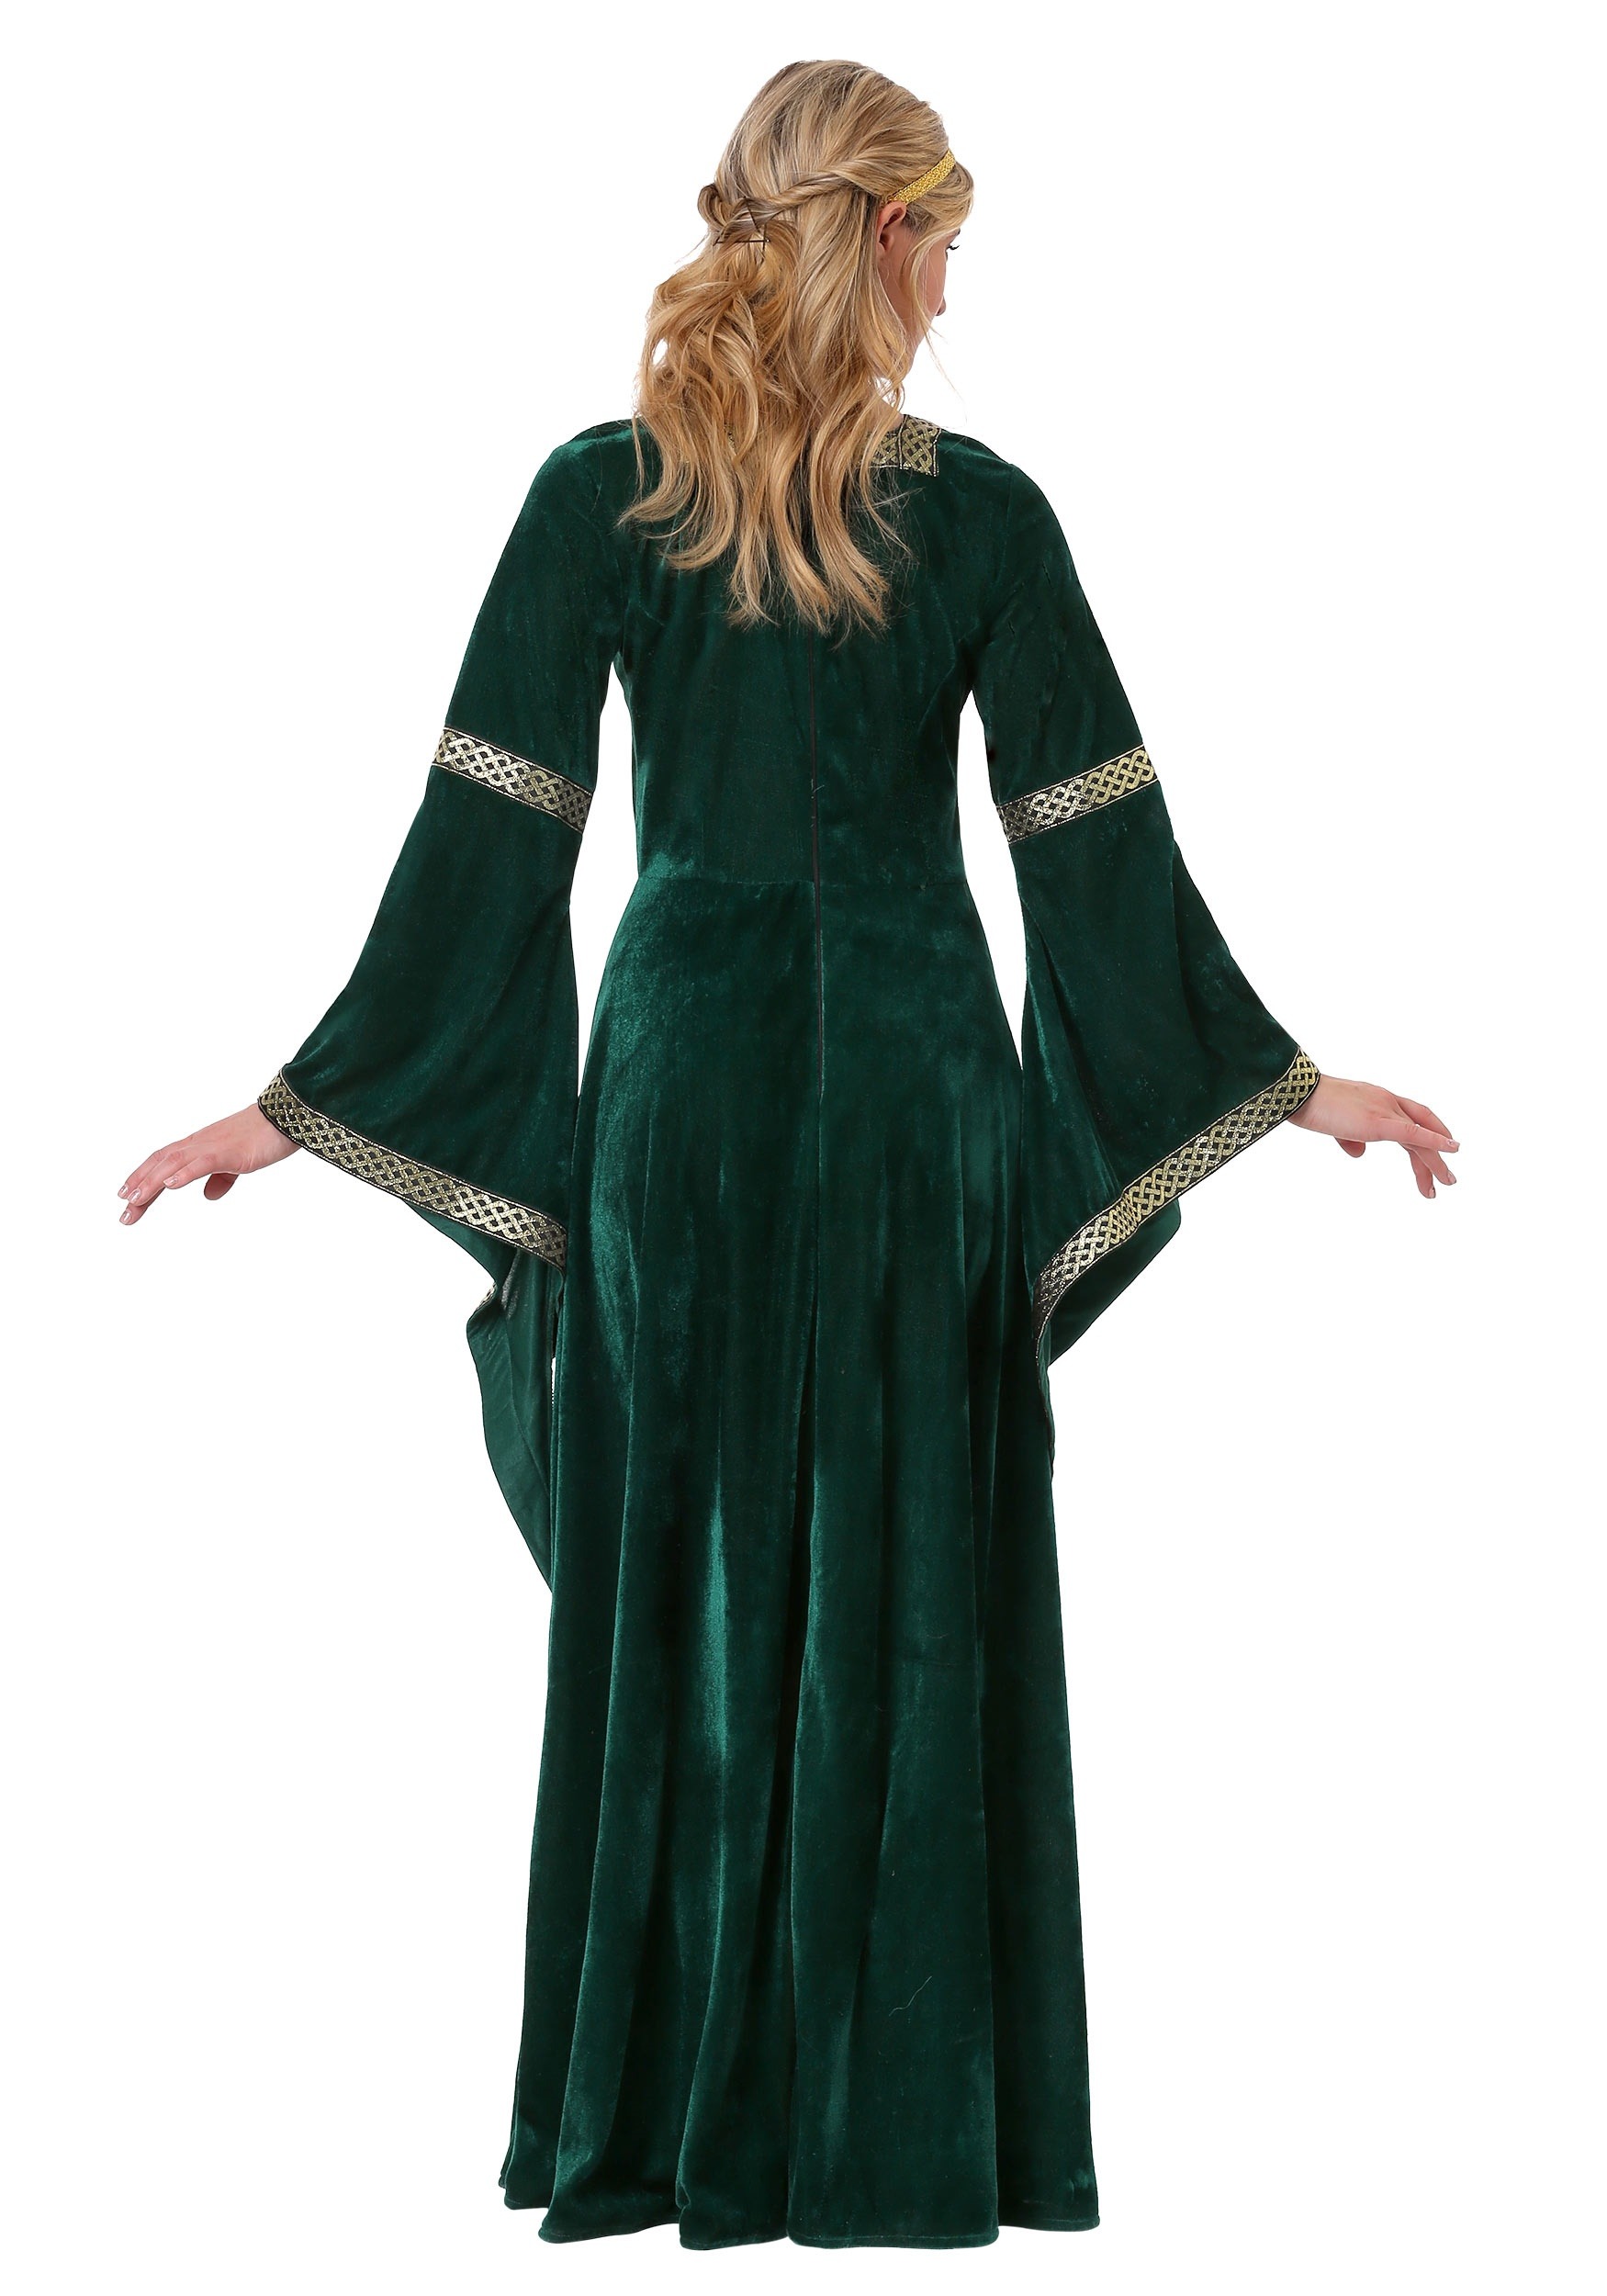 Renaissance Maiden Fancy Dress Costume For Women